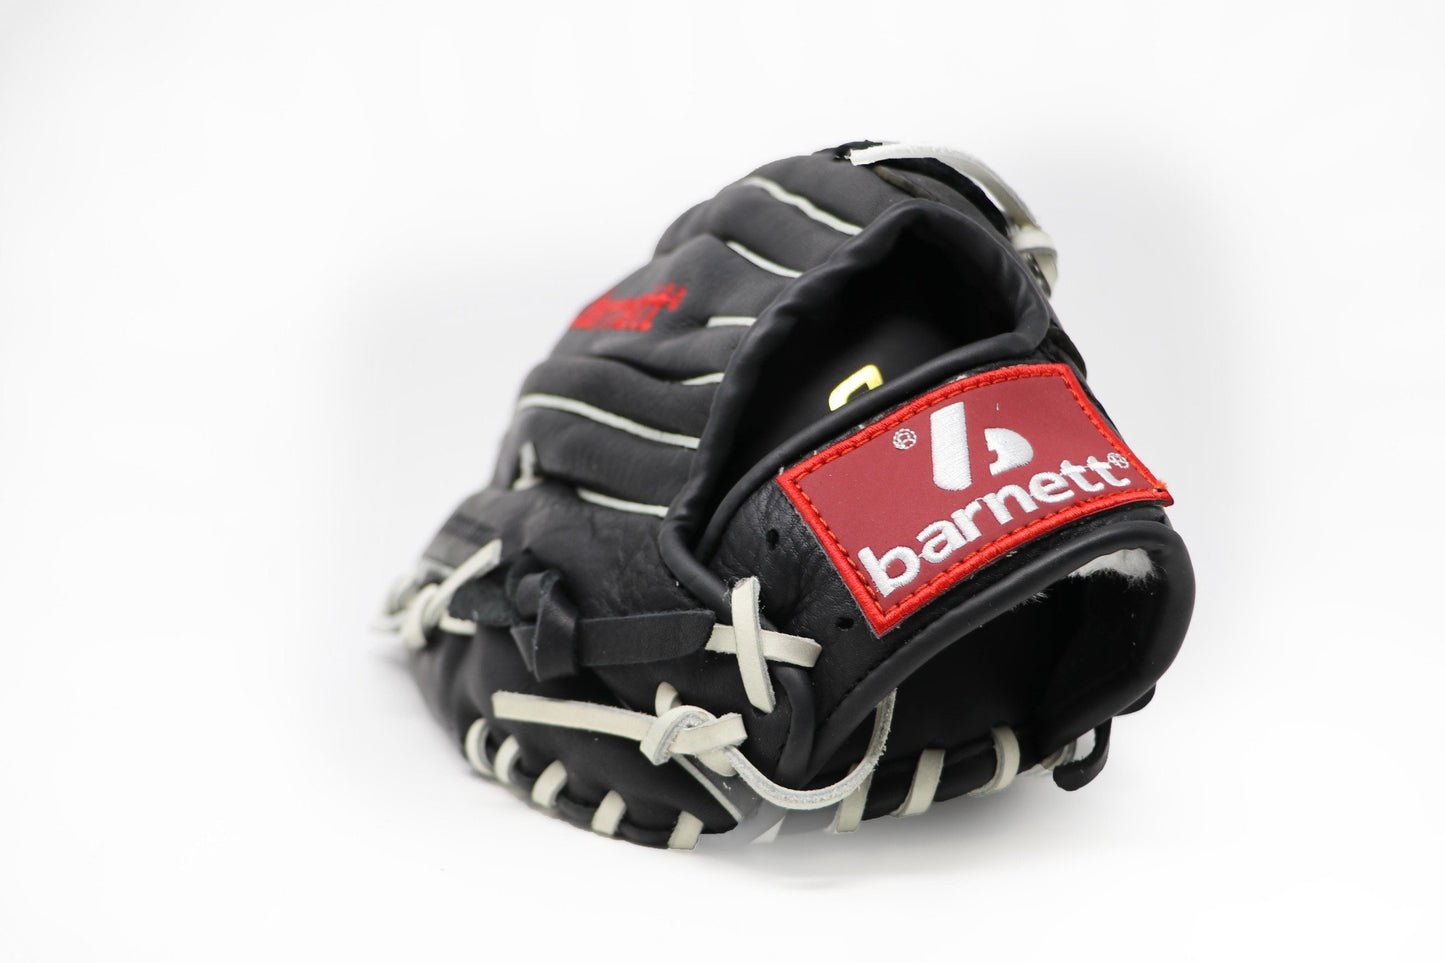 GL-120 Baseboll Handske, 12 (inch) Läder, Outfield, Svart